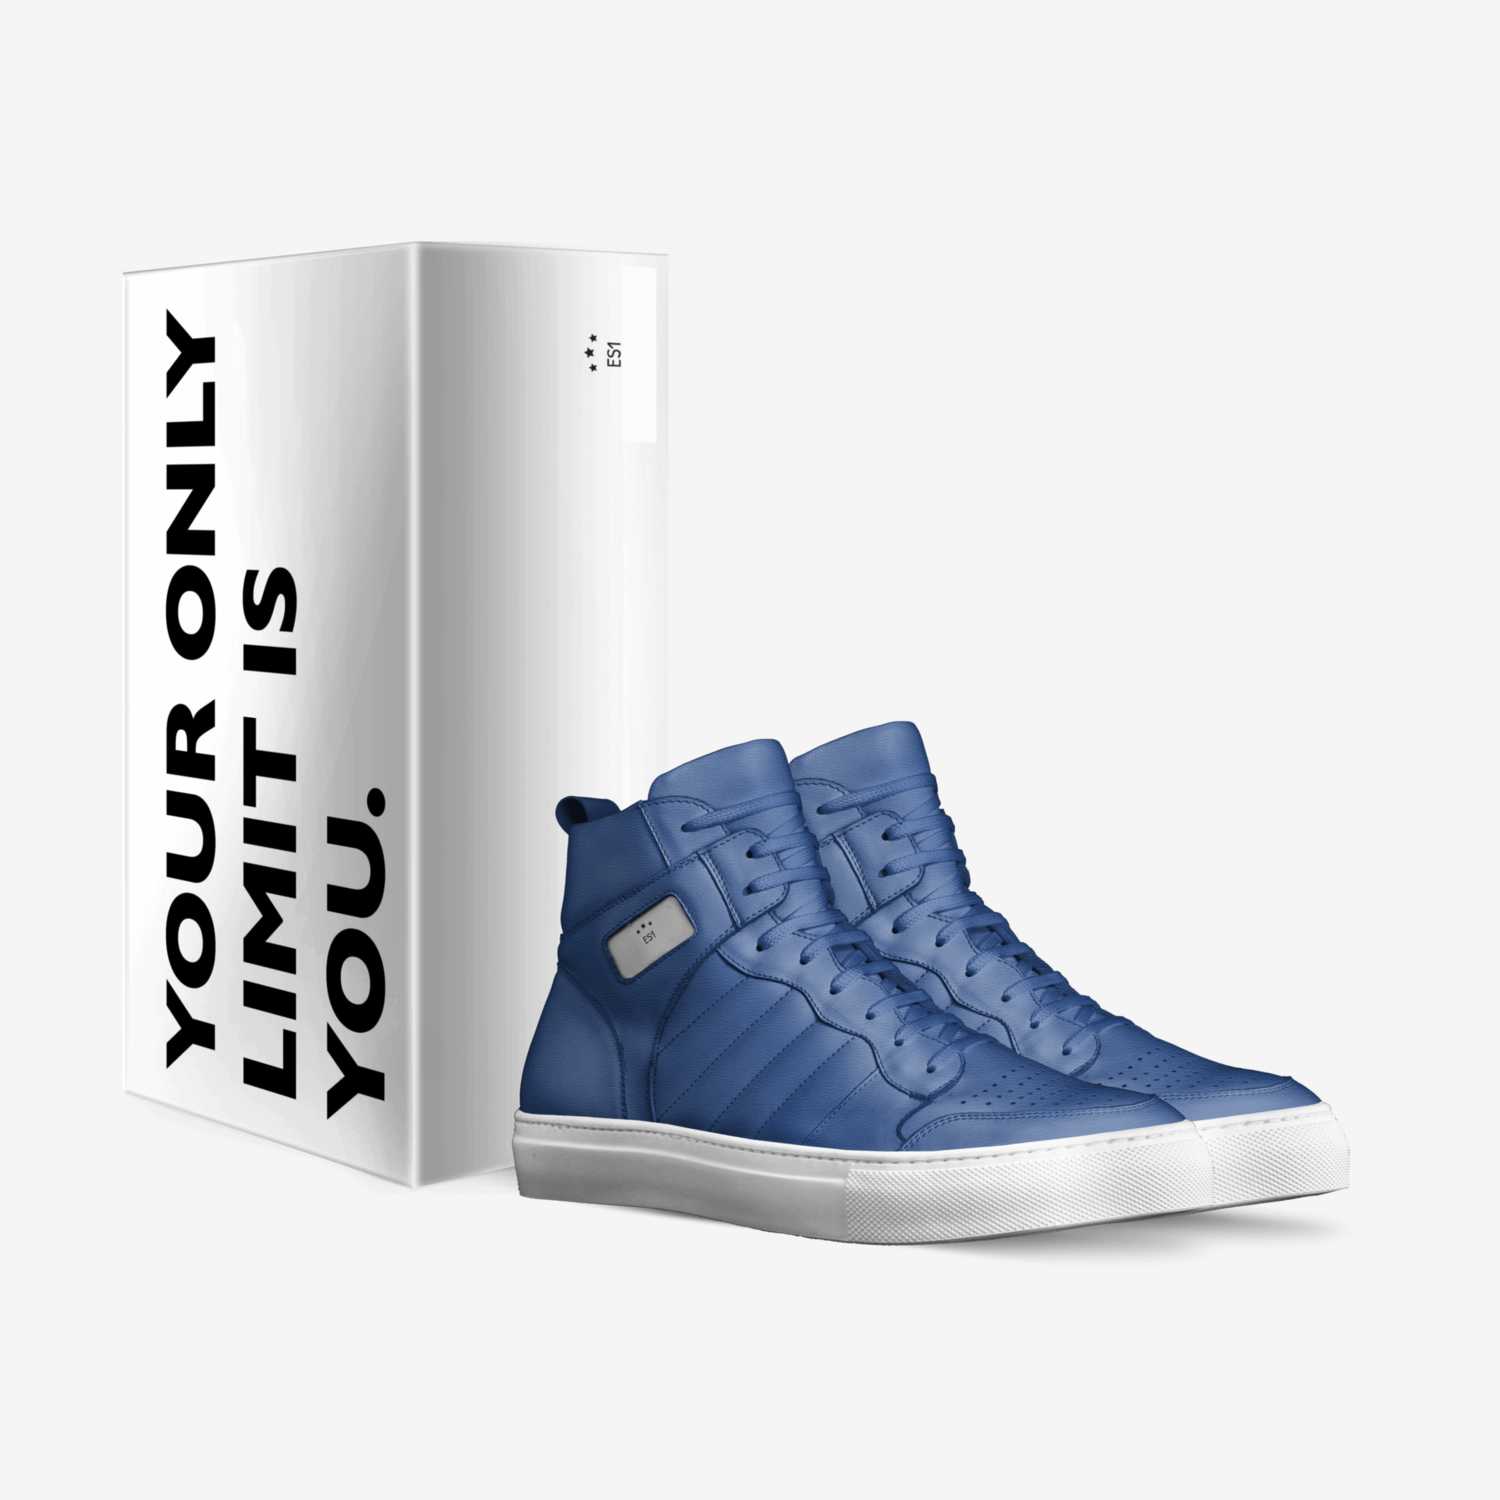 ES1 custom made in Italy shoes by Erik Spahiu | Box view